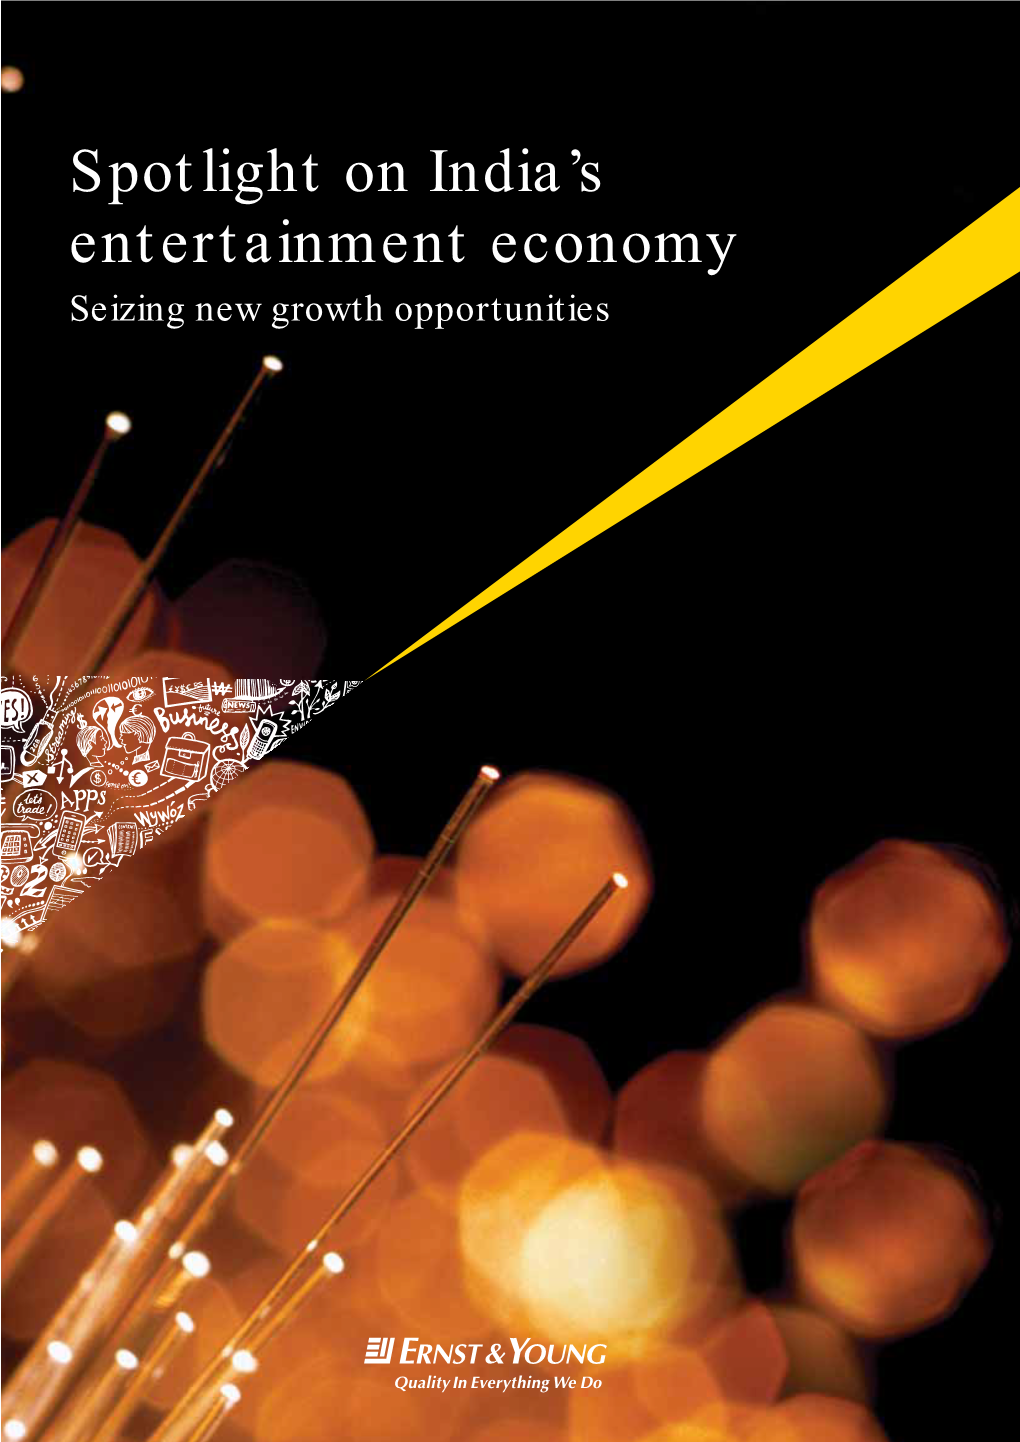 Spotlight on India's Entertainment Economy